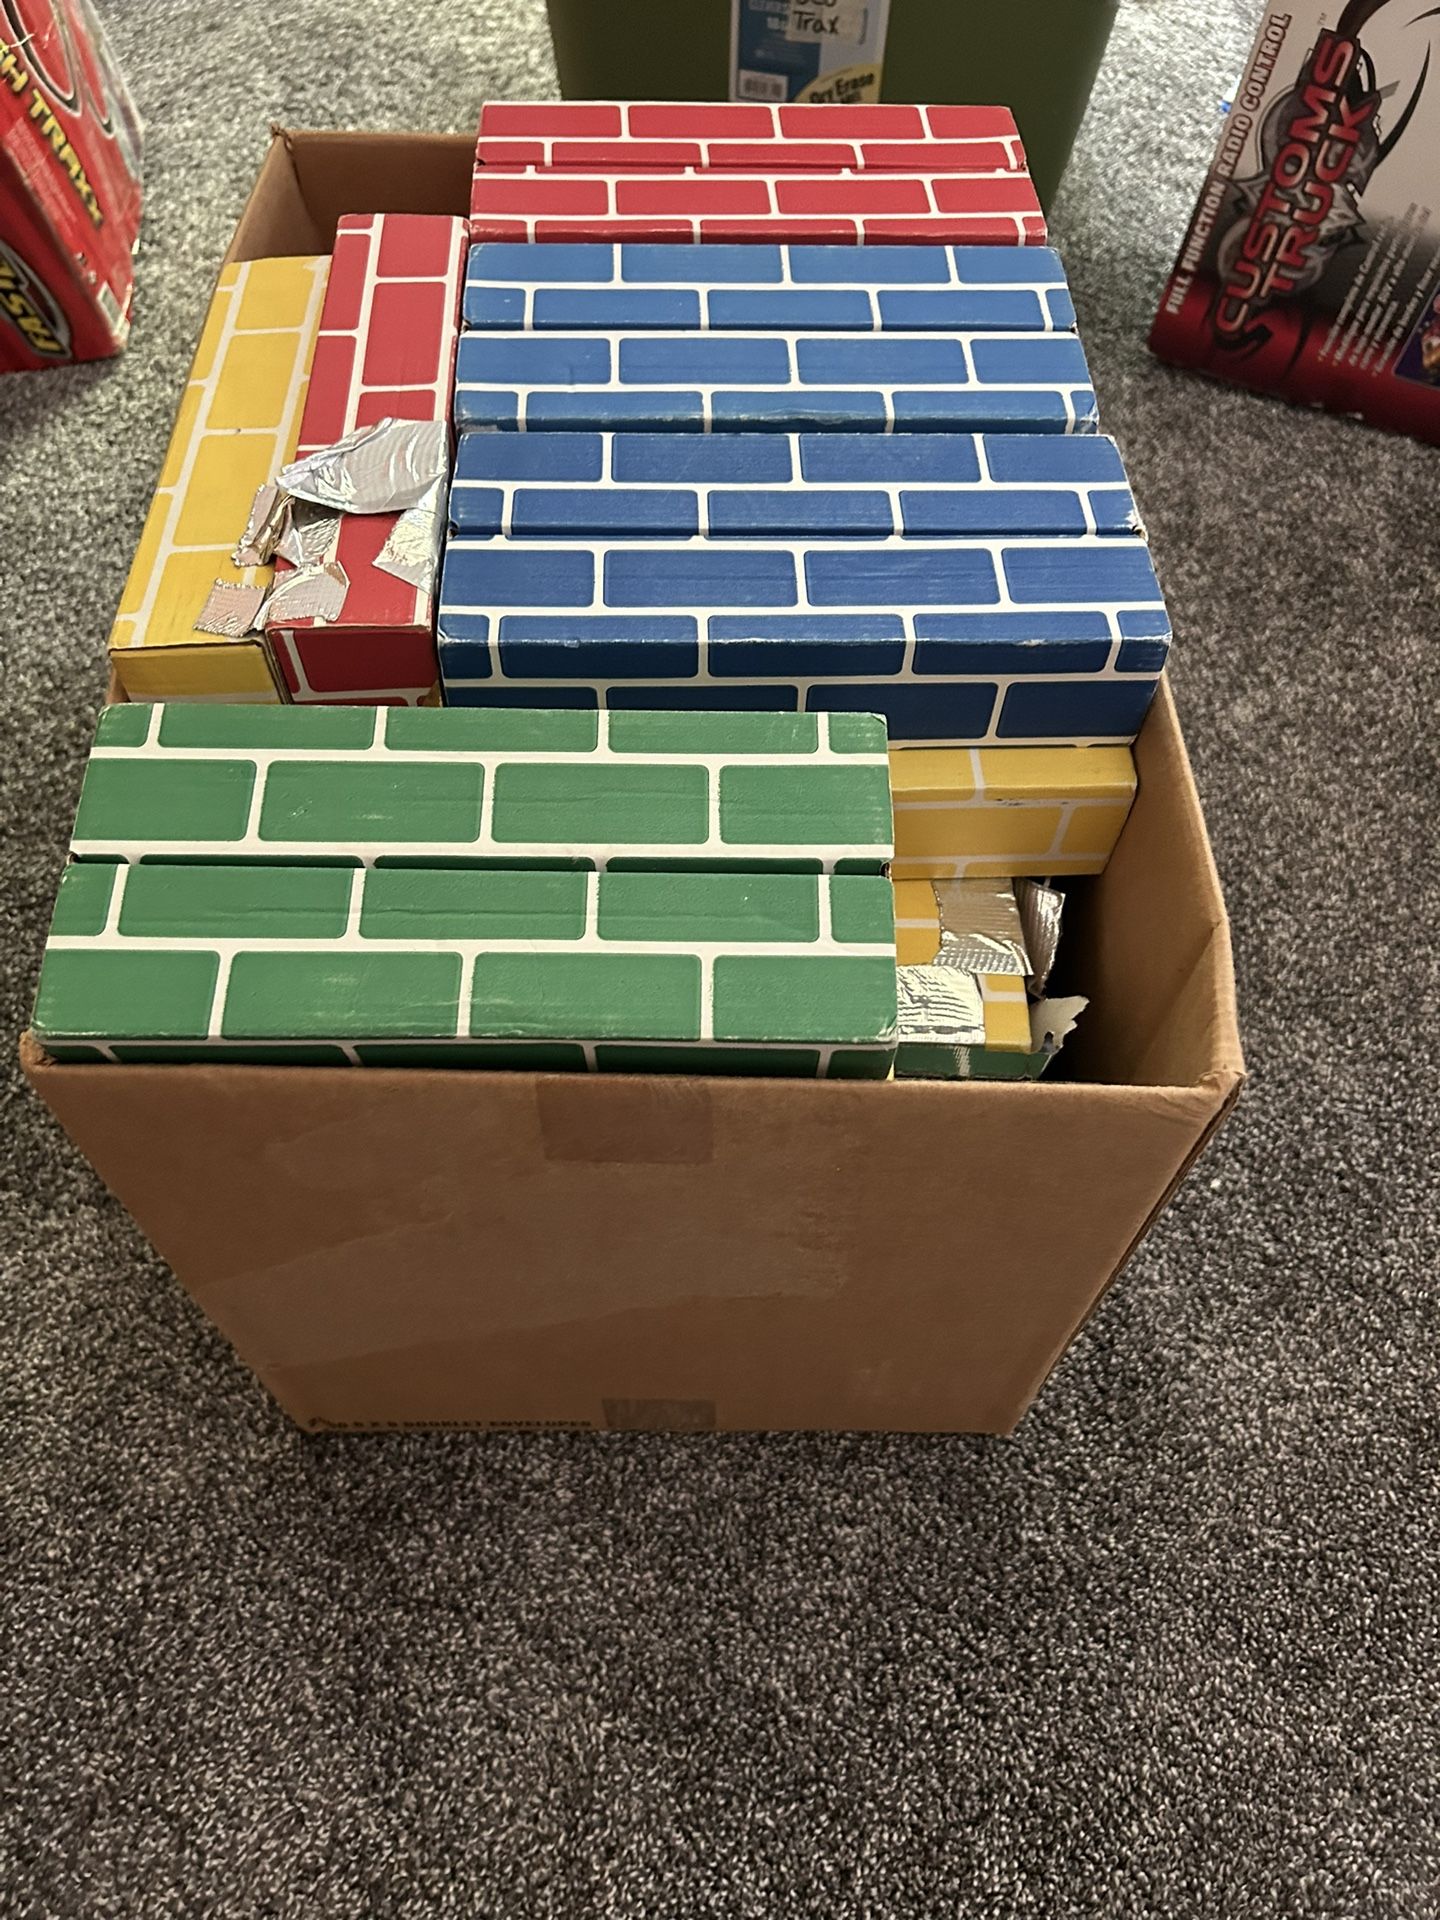 Lillian Vernon Primary Building Bricks - Kids Cardboard Bricks,